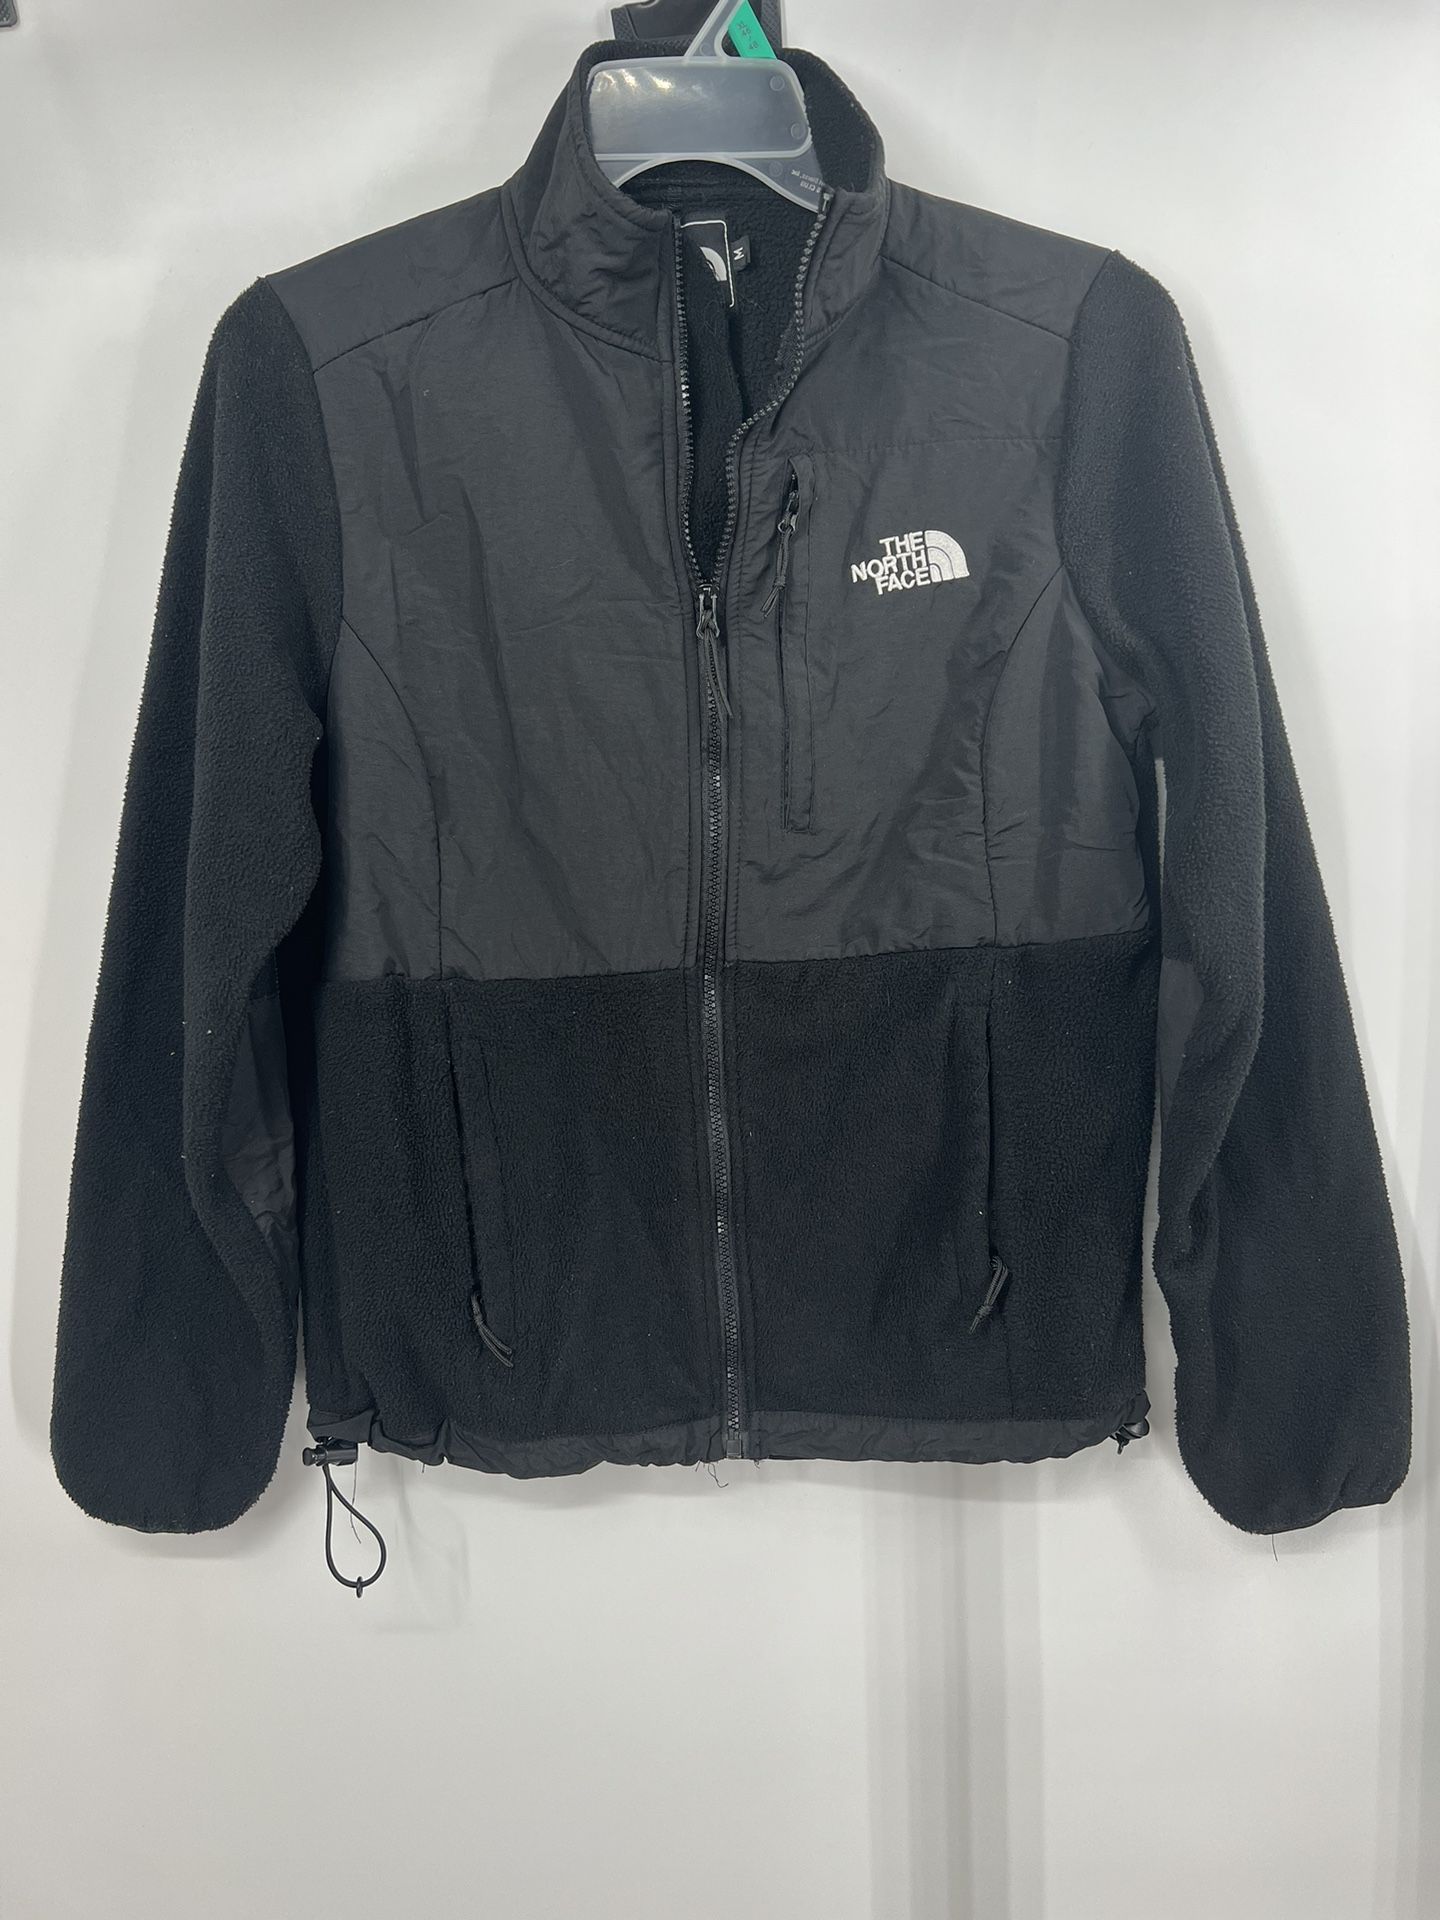 The North Face Women's Black Full Zip Denali Fleece Jacket Size M